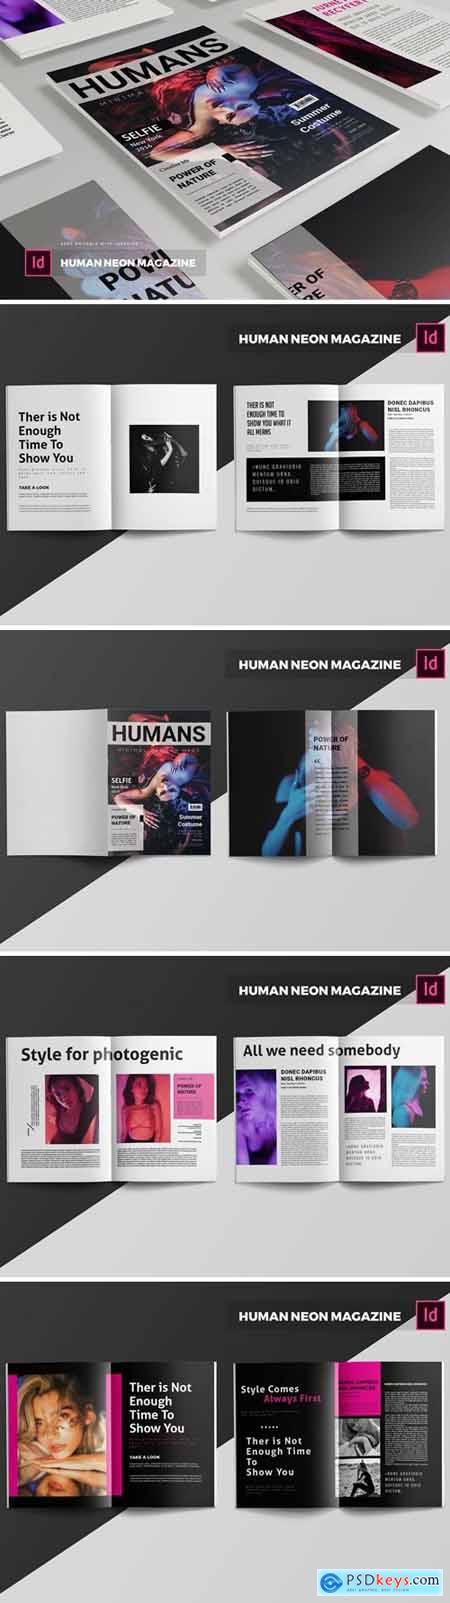 Human Neon Magazine Template